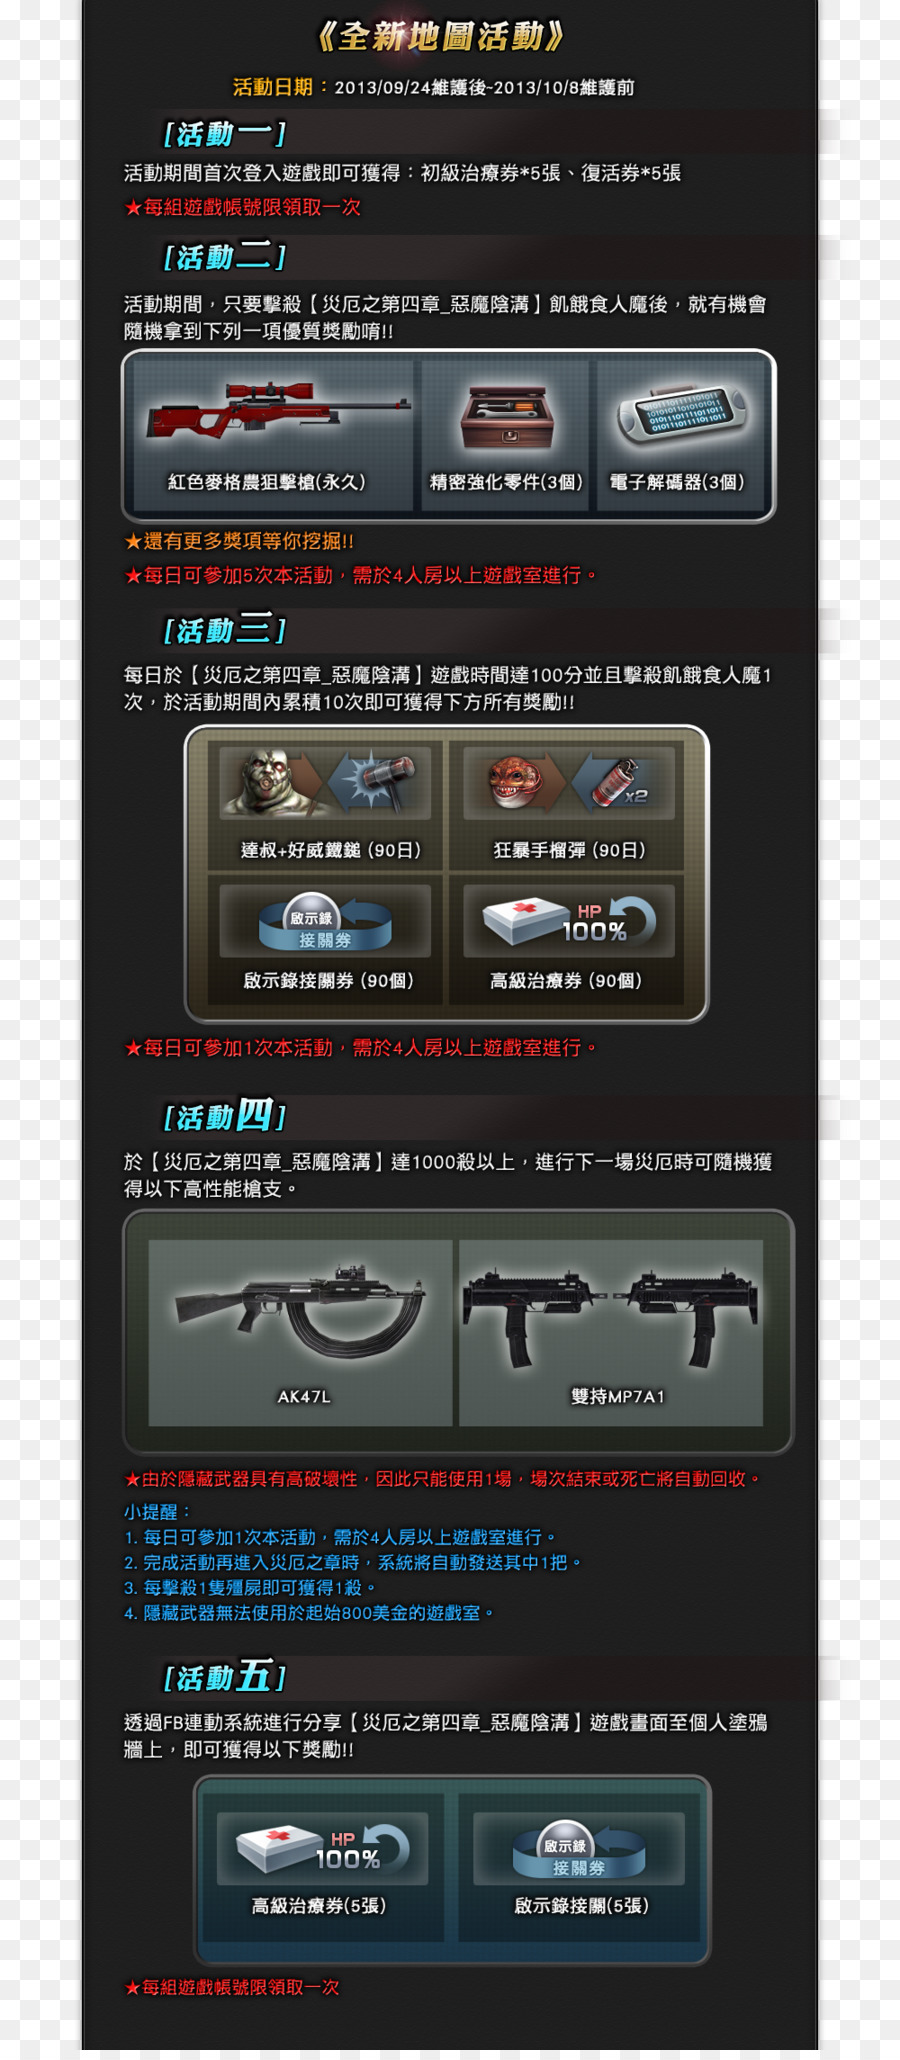 Font Logo Brand Elettronica Screenshot - Counter Strike Online 2